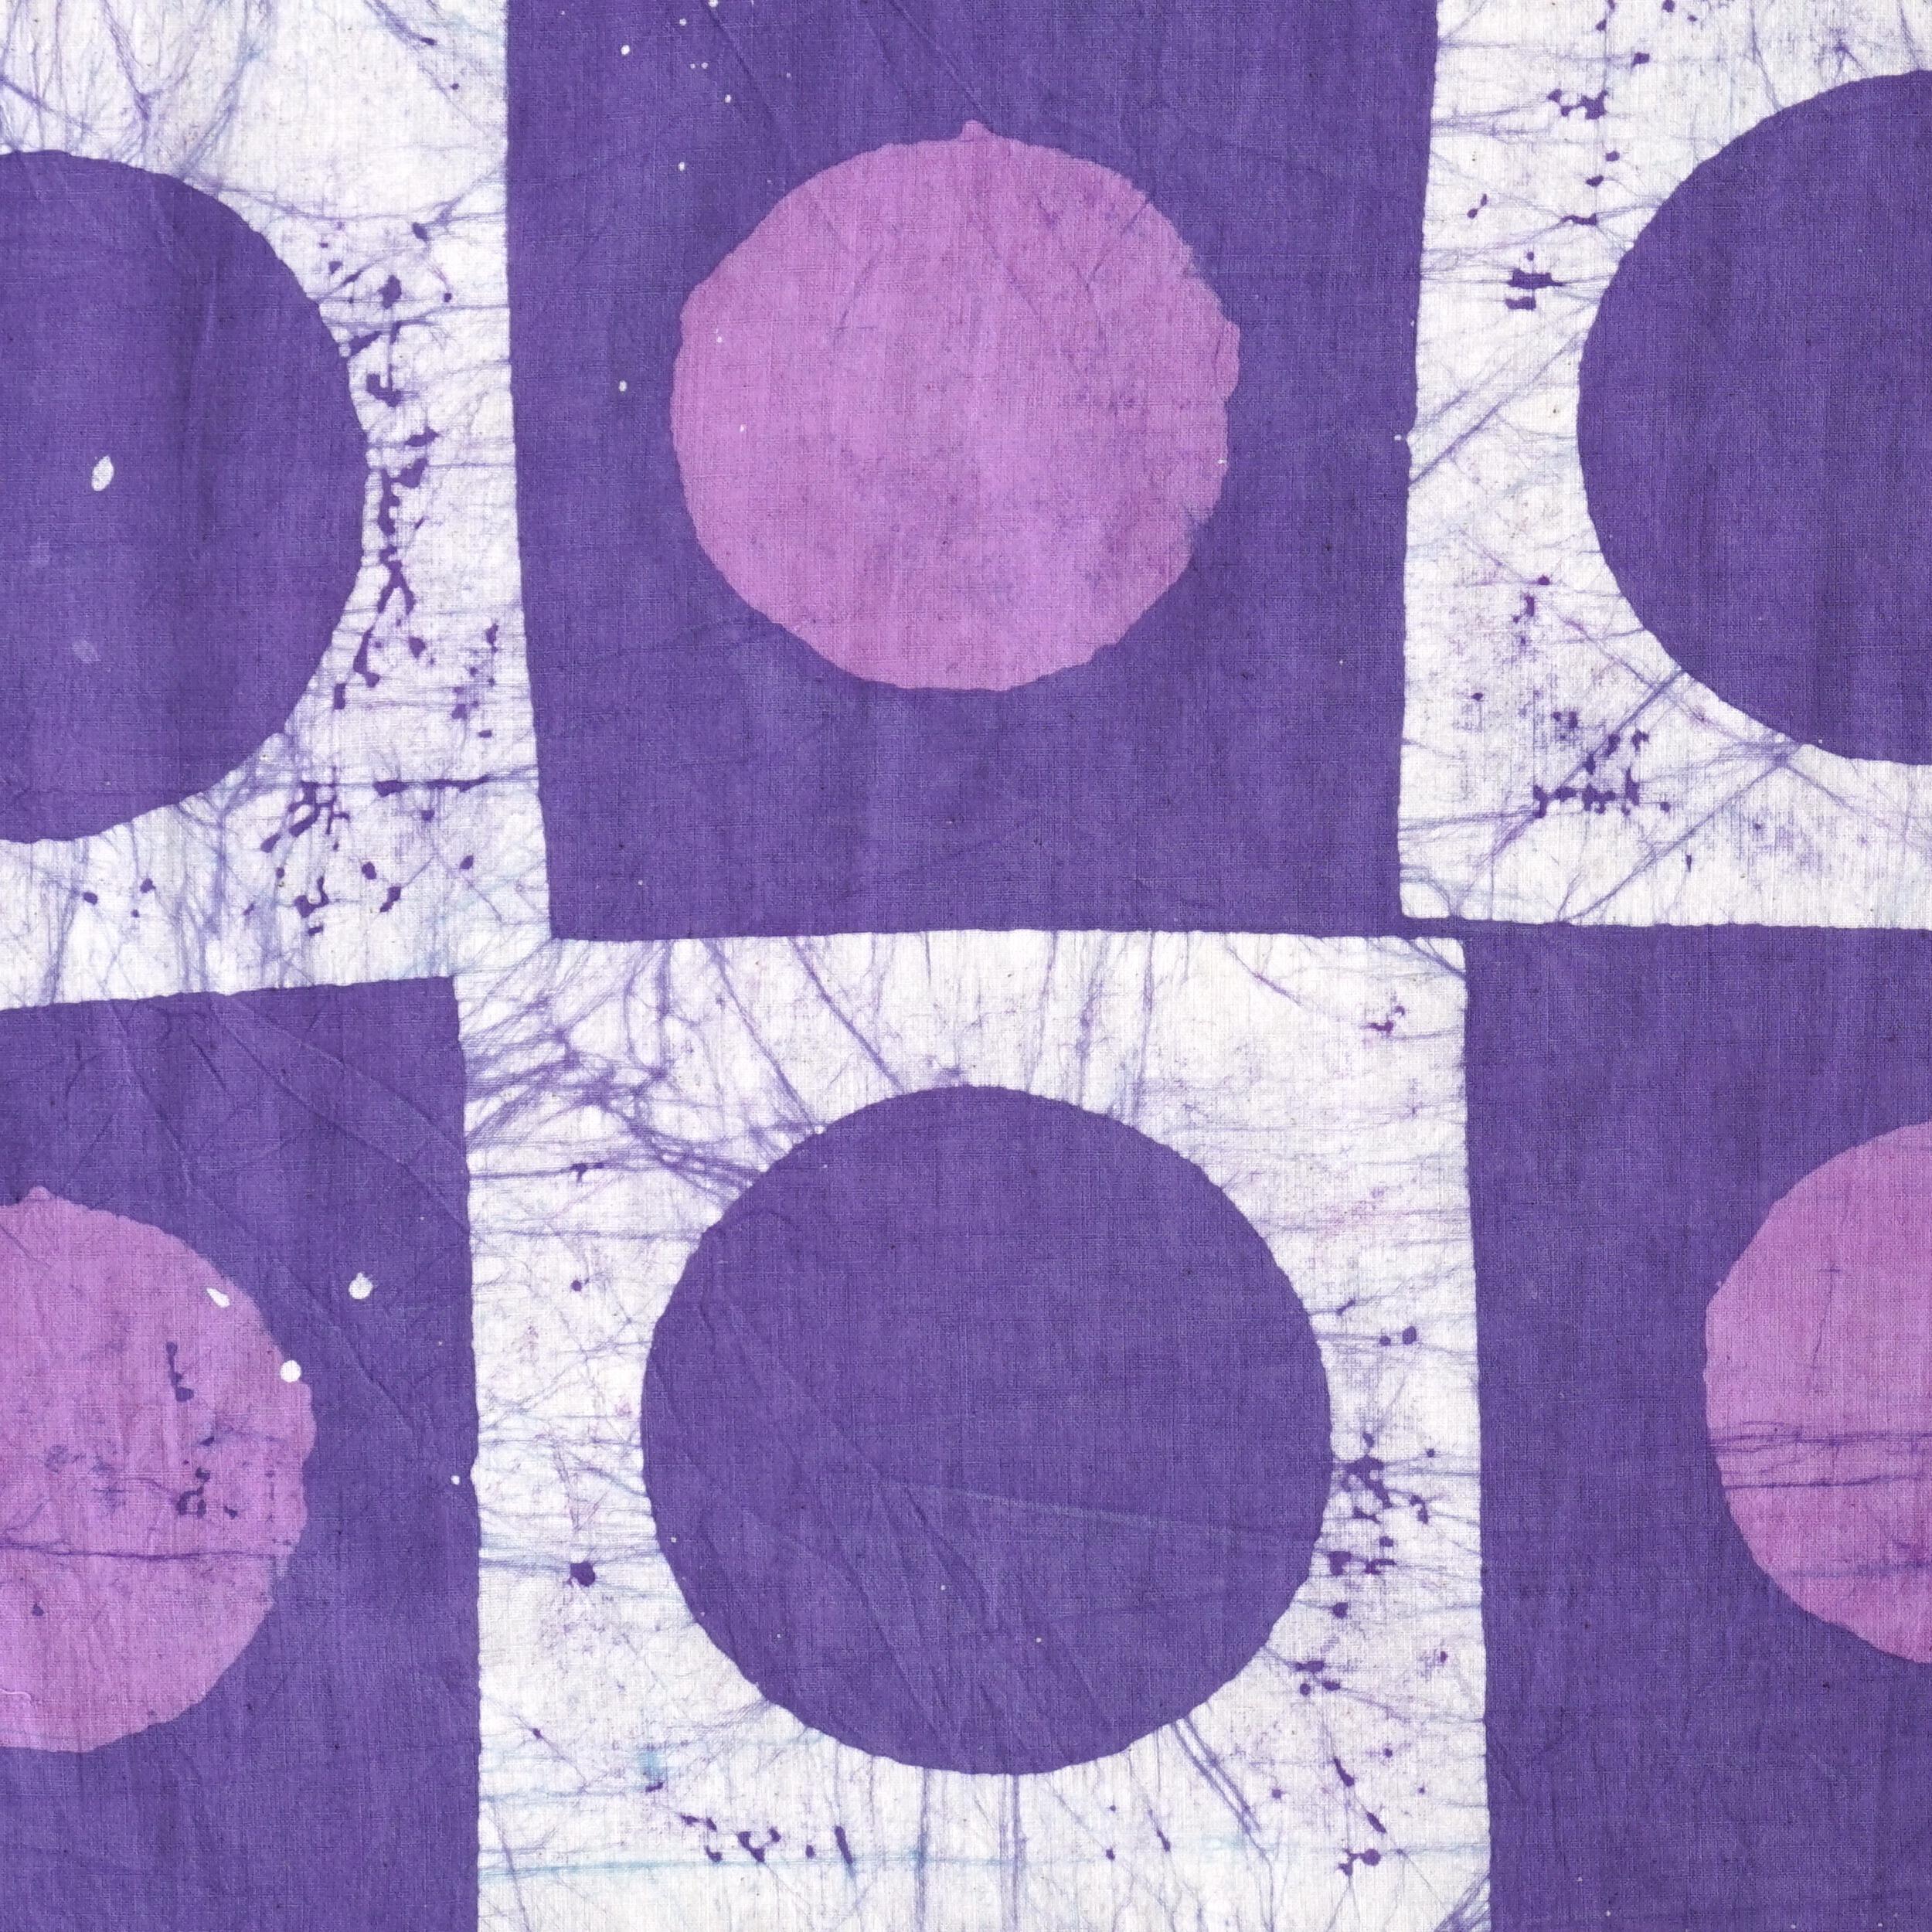 100% Block-Printed Batik Cotton Fabric From India - Soap Bubble Print - Purple Reactive Dye - Flat